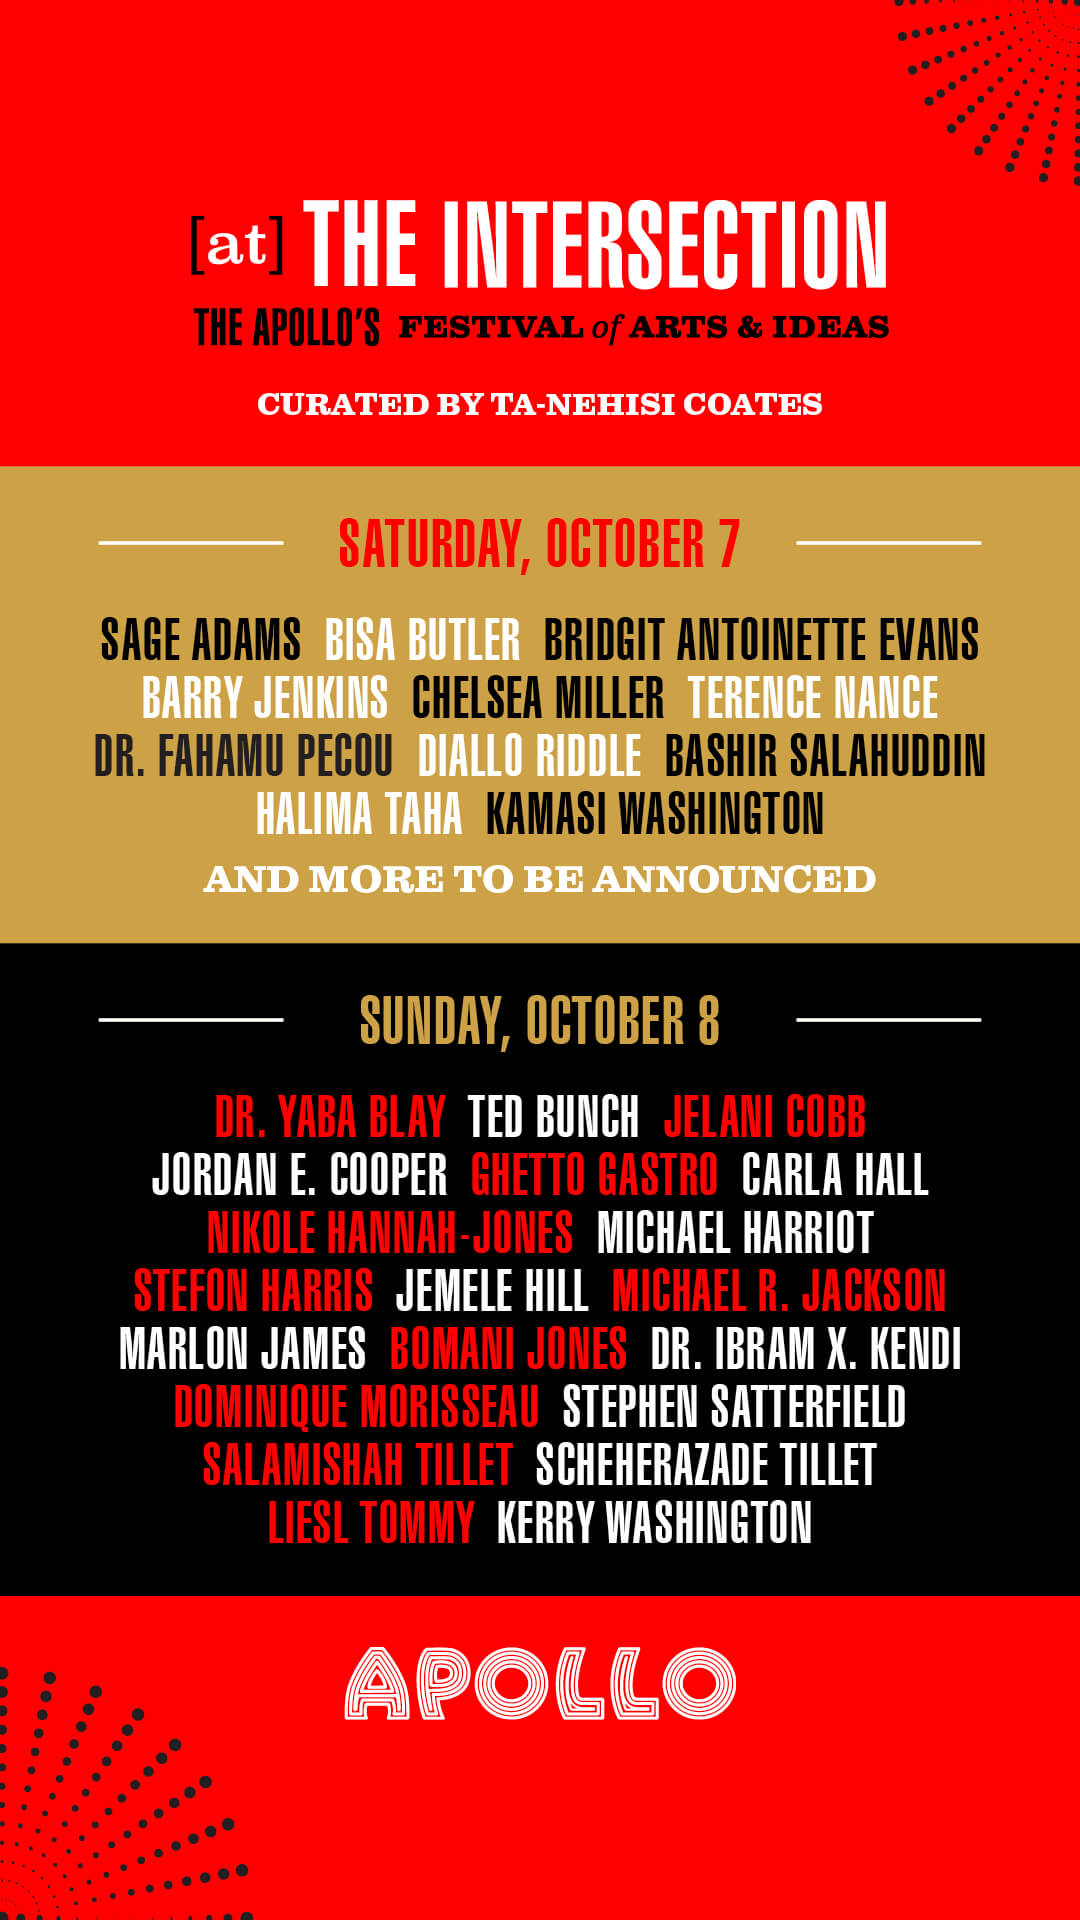 Apolo festival timeline poster